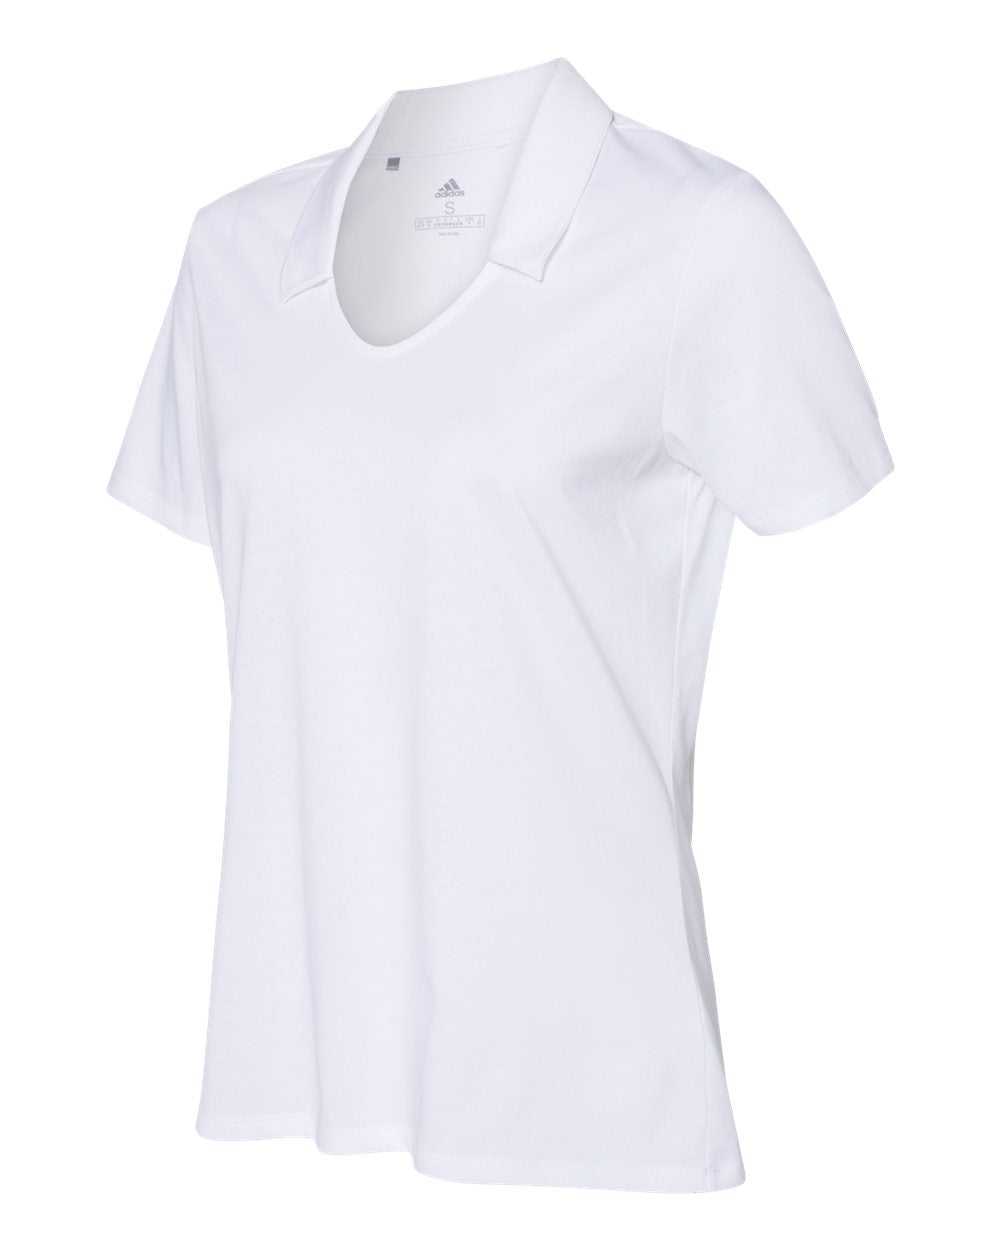 Adidas A323 Women's Cotton Blend Sport Shirt - White - HIT a Double